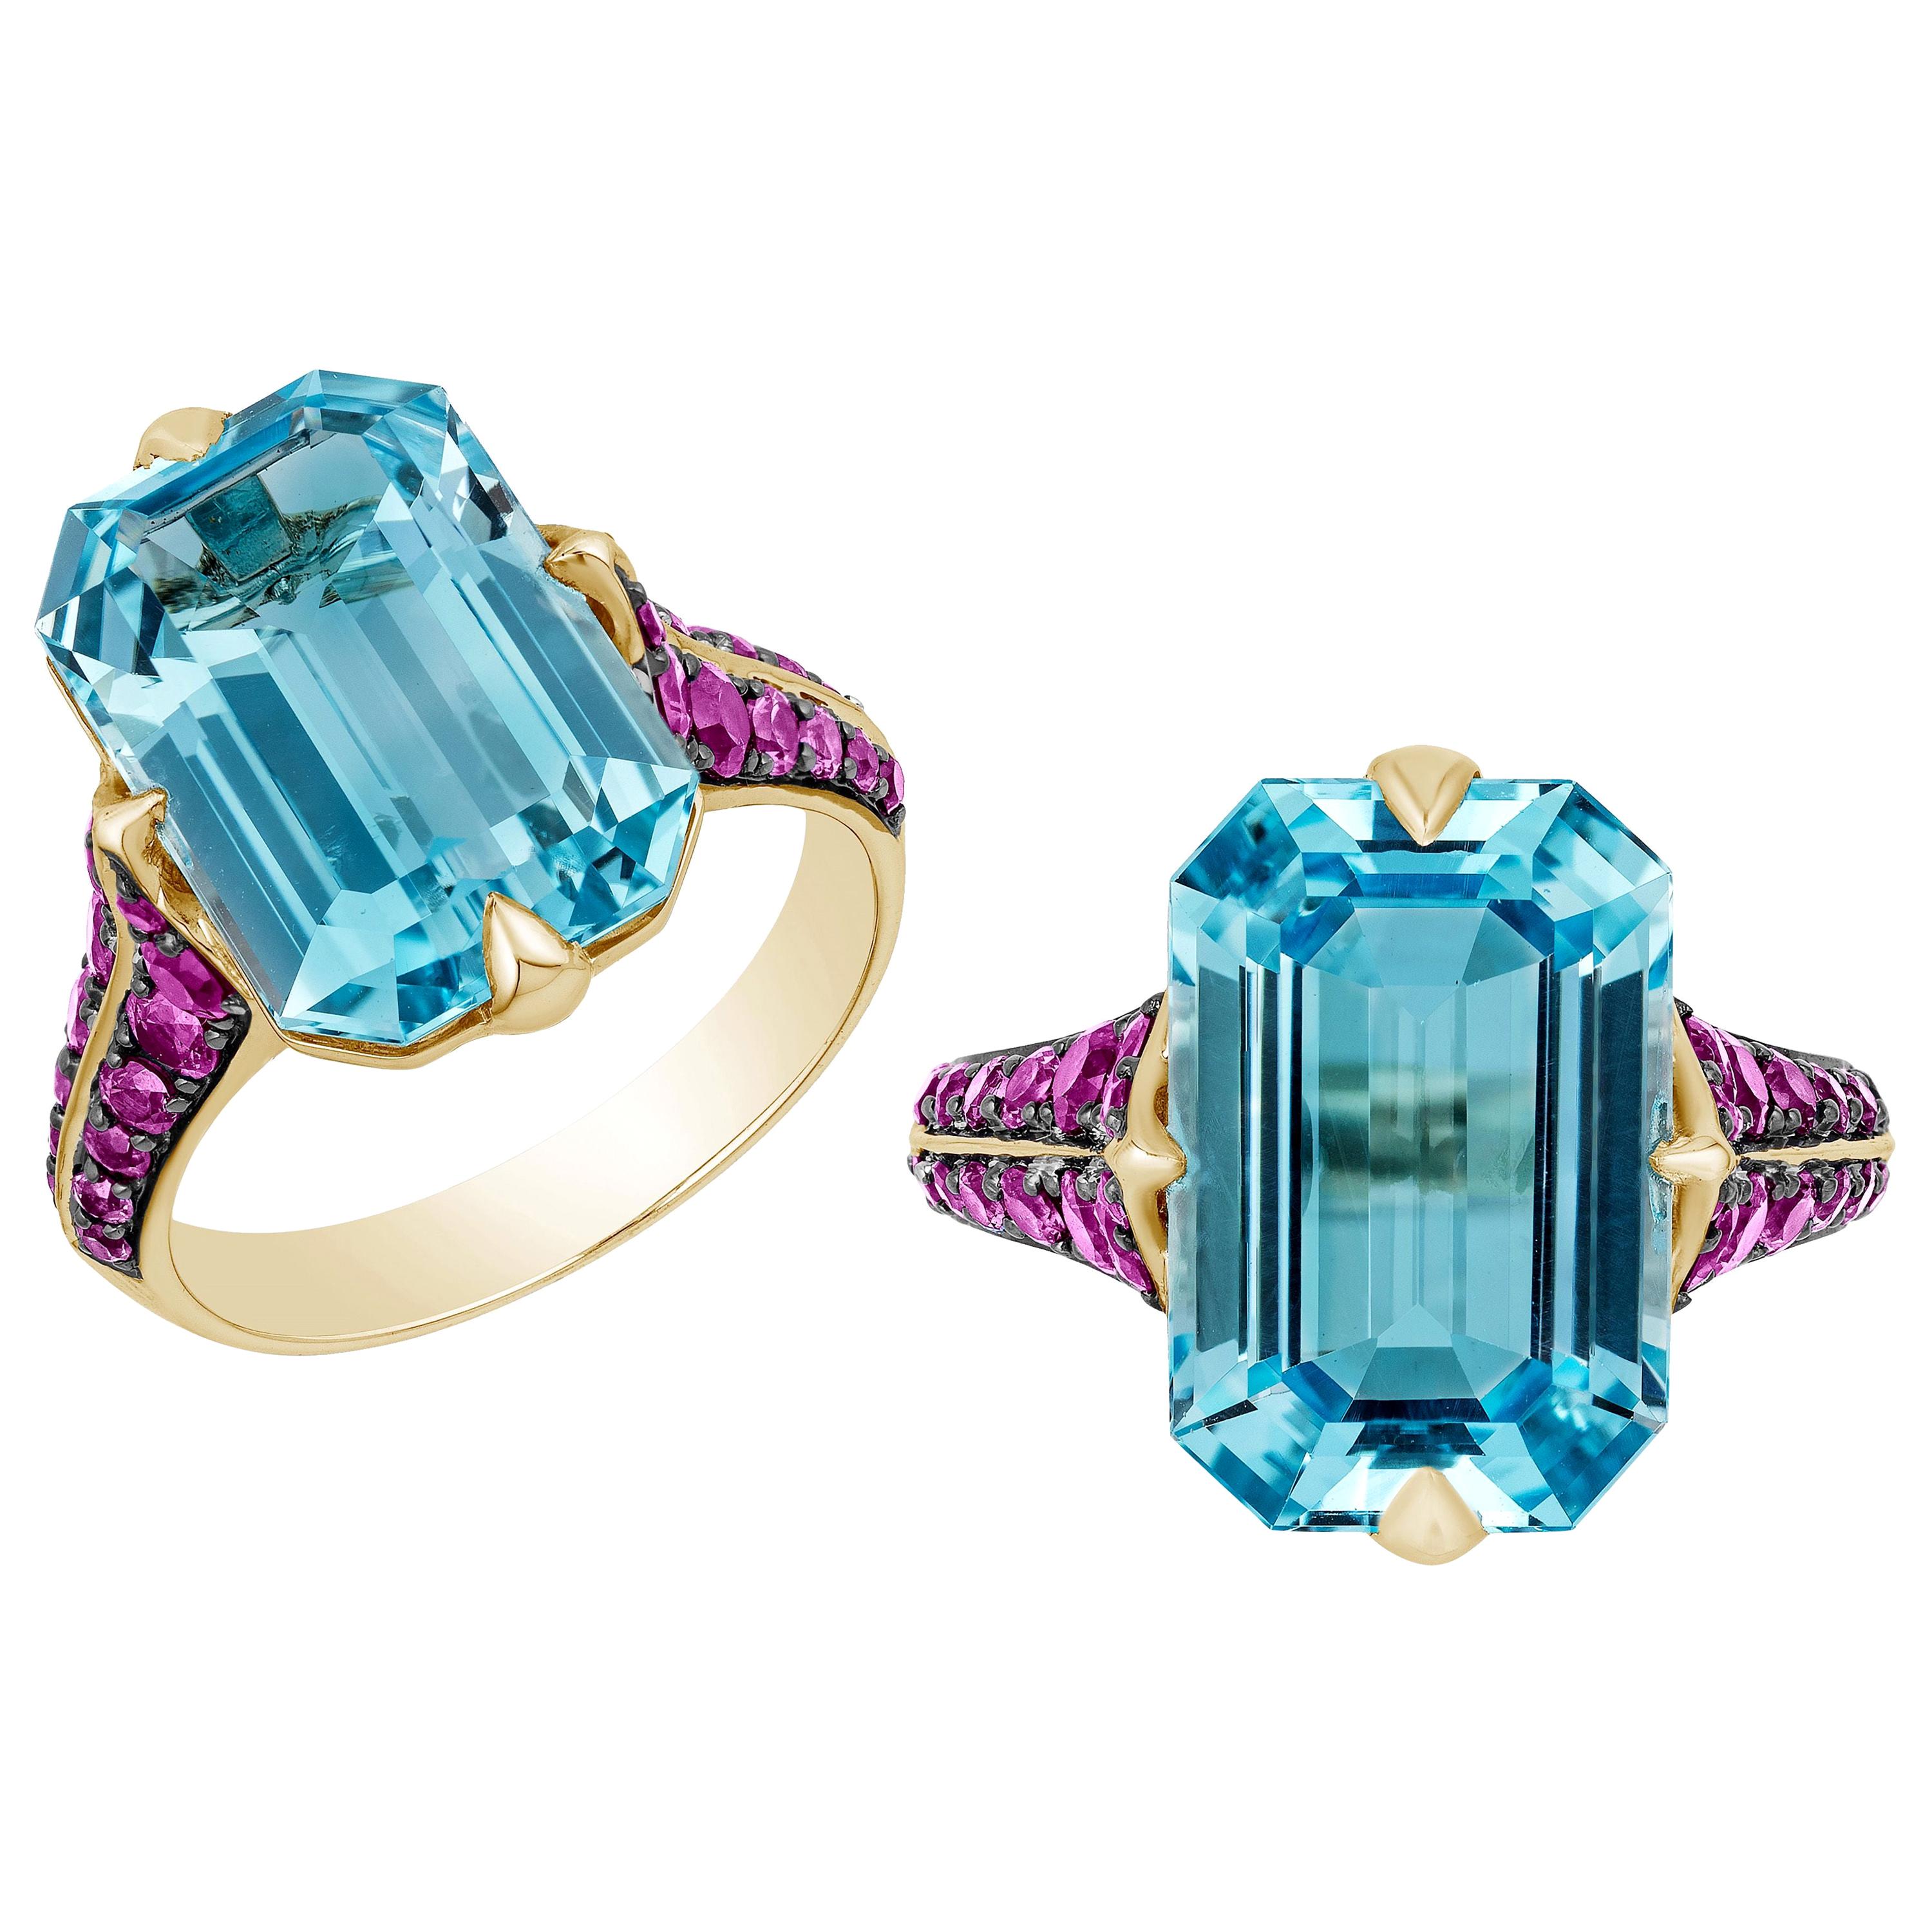 Goshwara Blue Topaz Emerald Cut with Pink Sapphire Ring